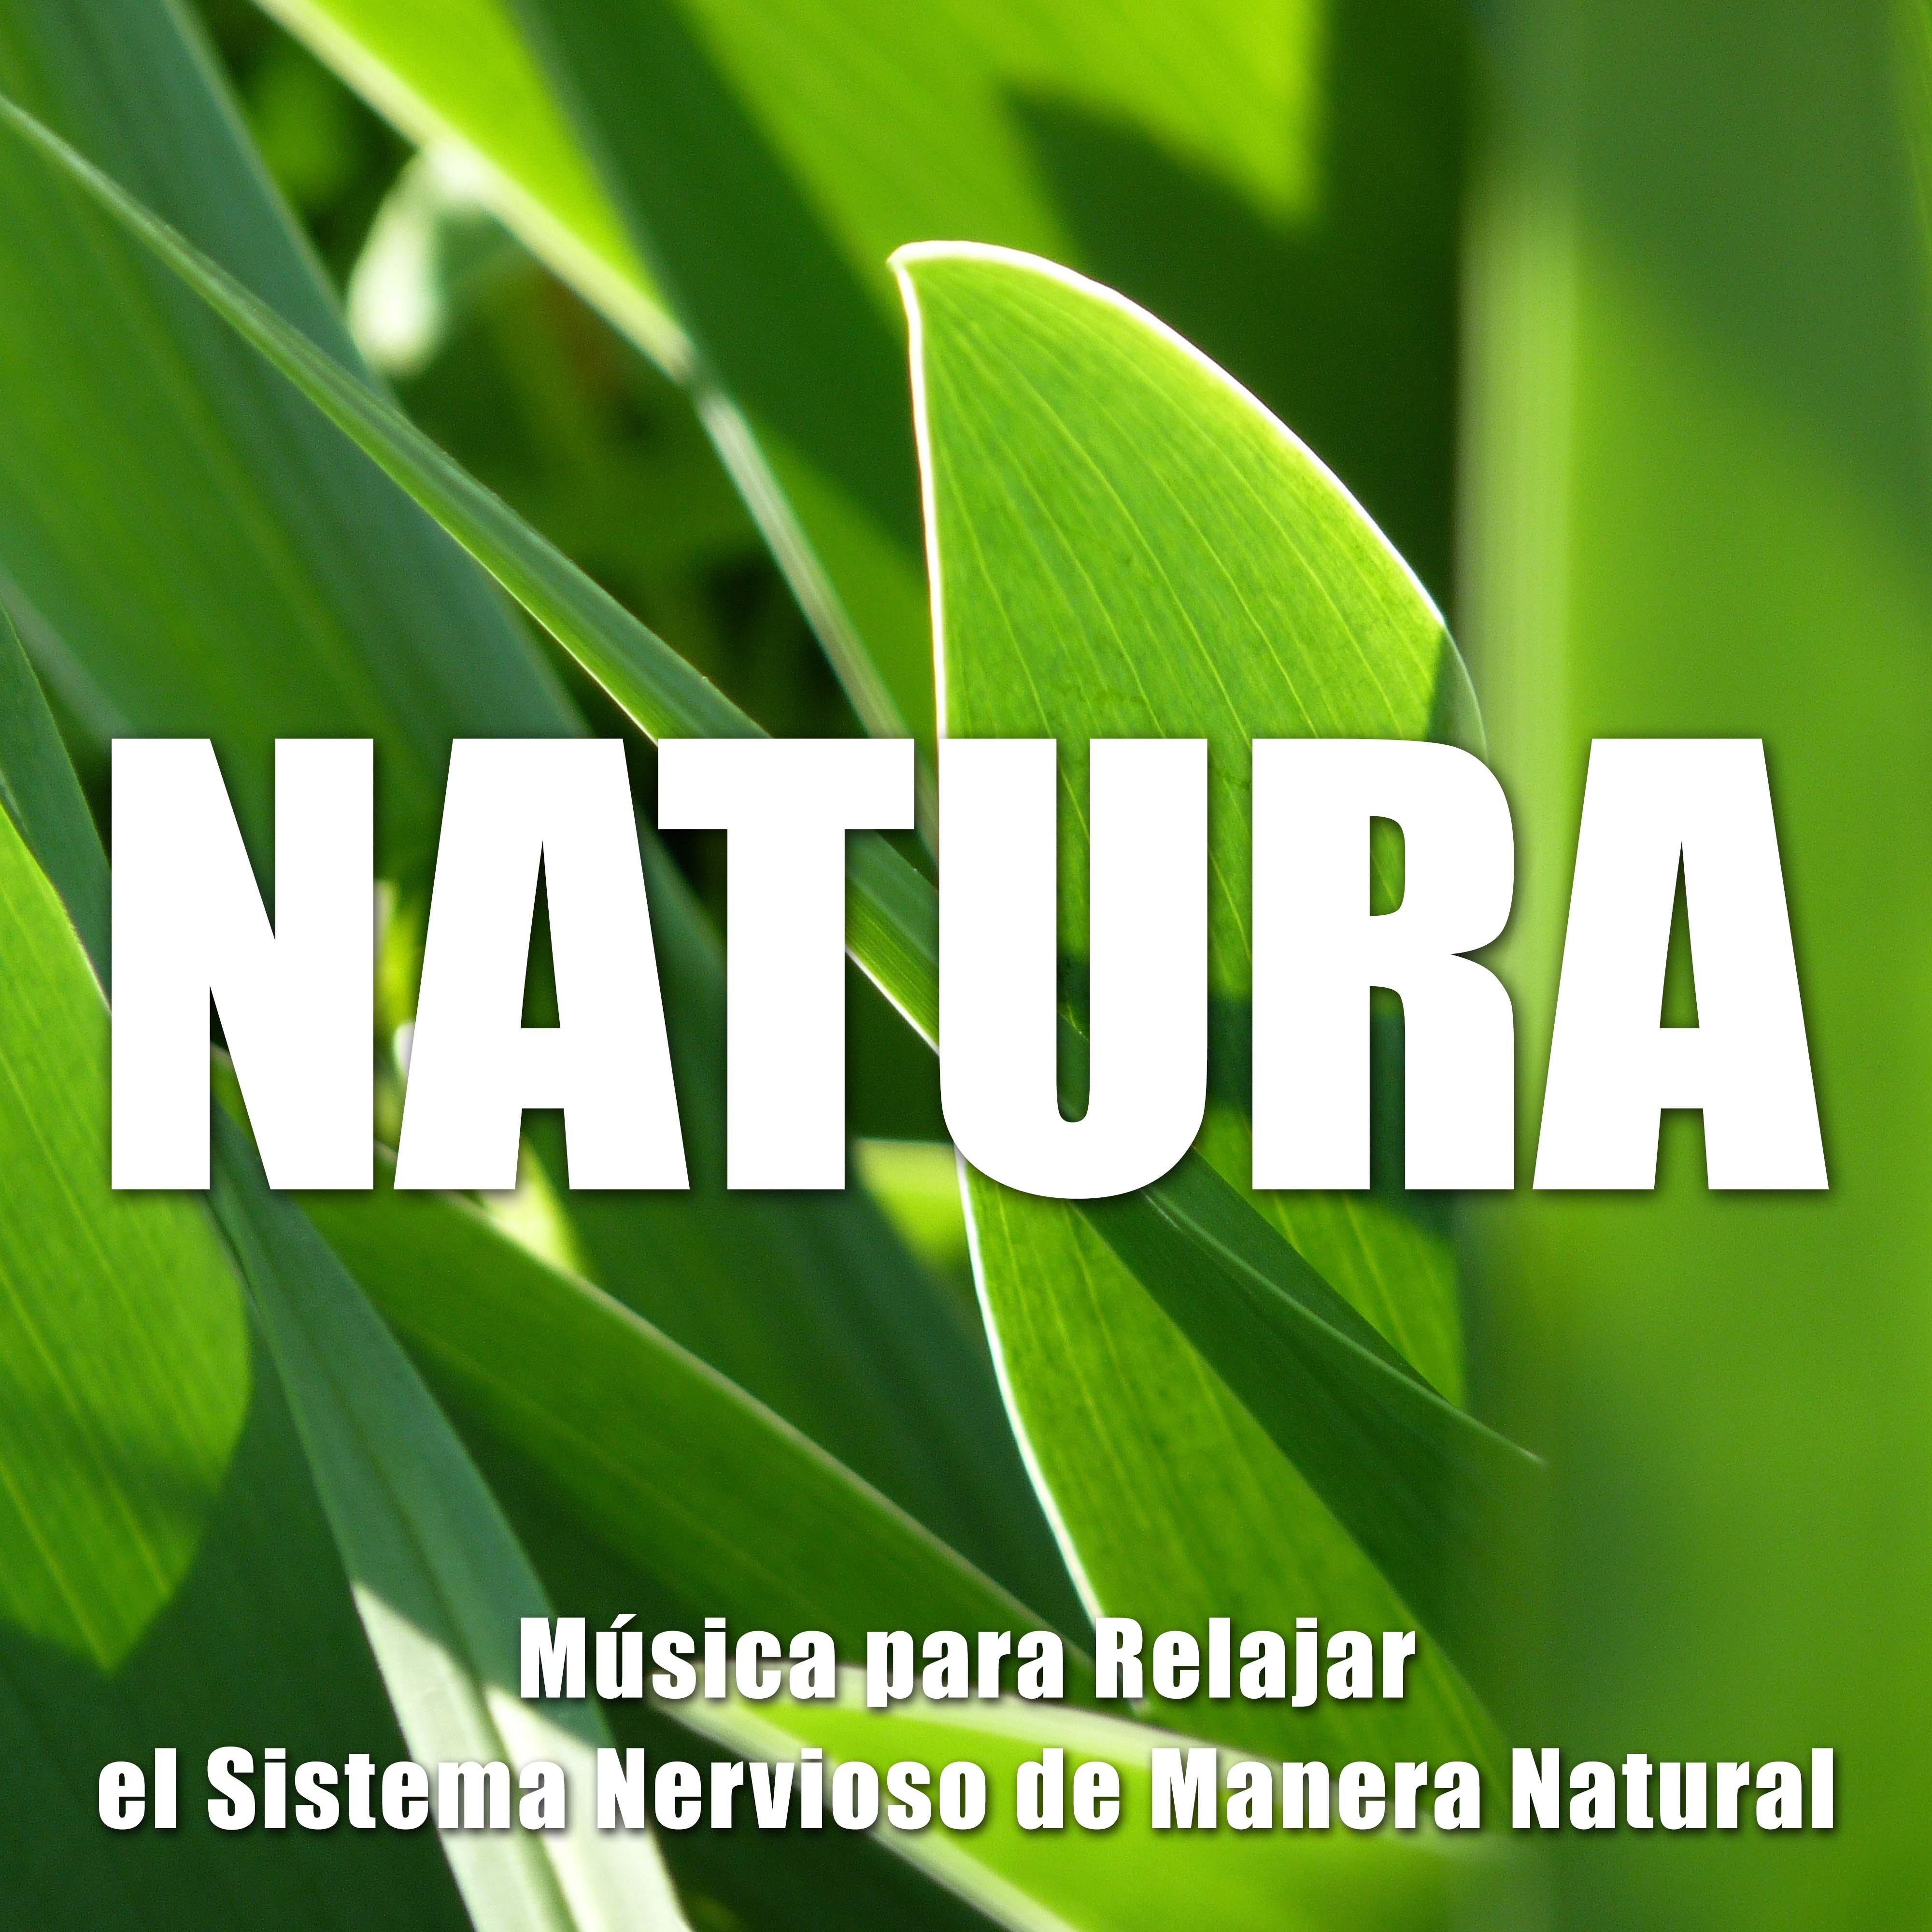 Natura New Age - Musica para Relajar el Sistema Nervioso de Manera Natural